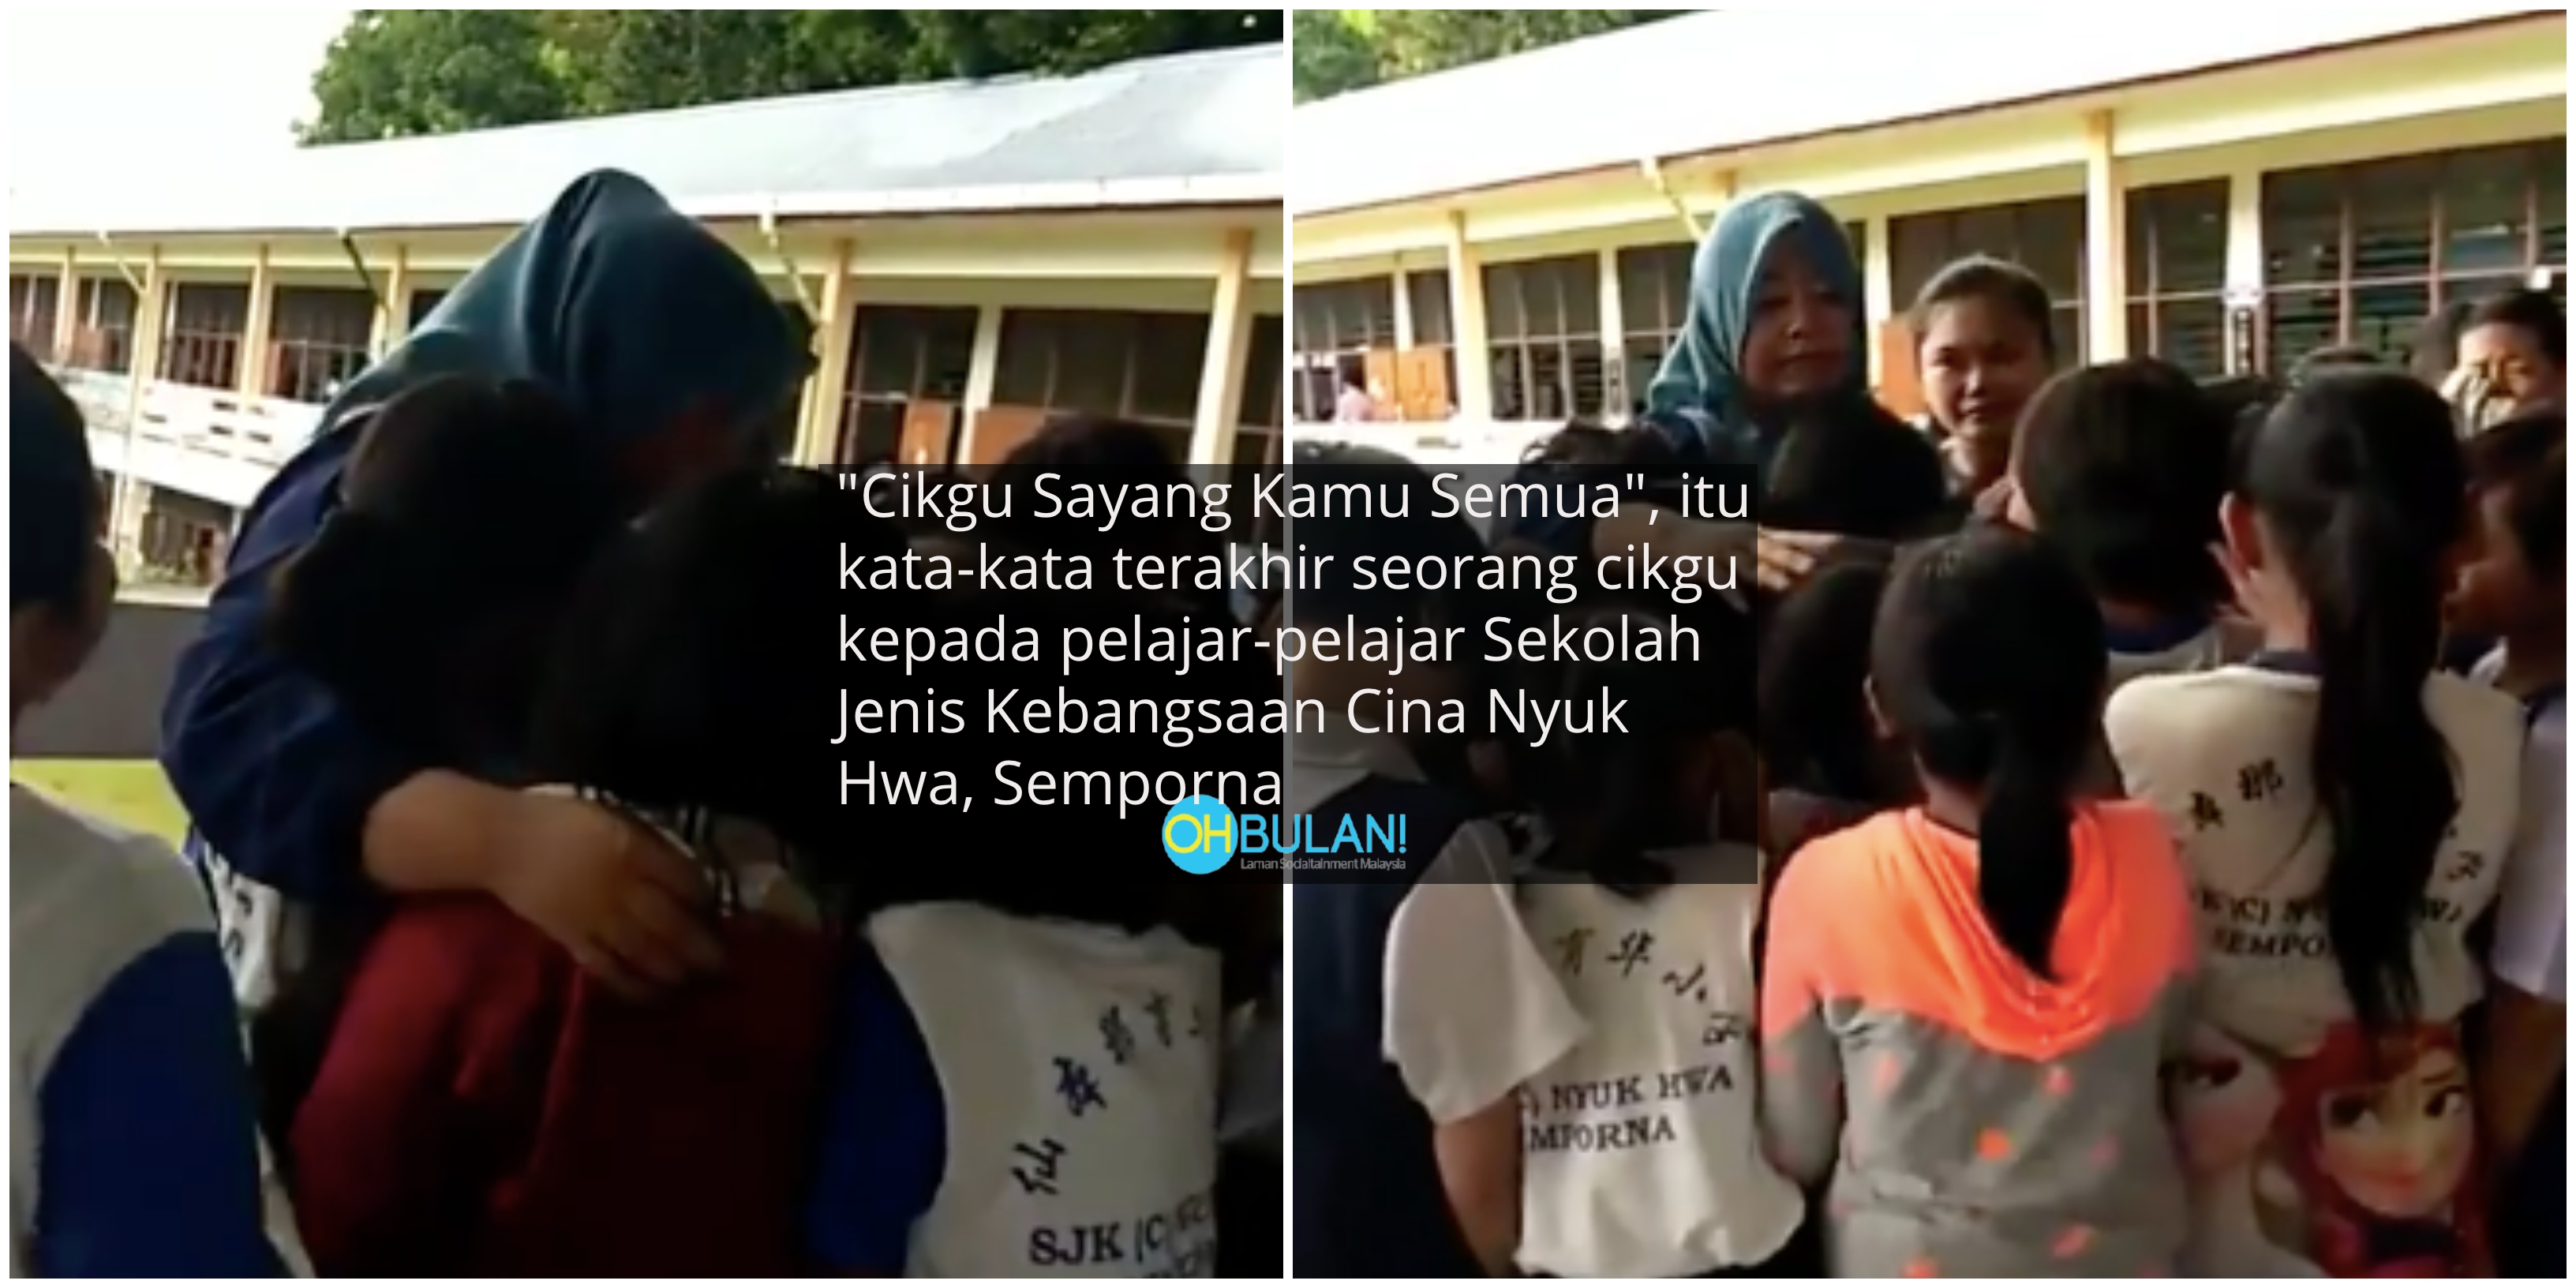 [VIDEO] Aksi Sayu Perpisahan Terakhir Guru & Anak Murid Ini Undang Sebak Netizen